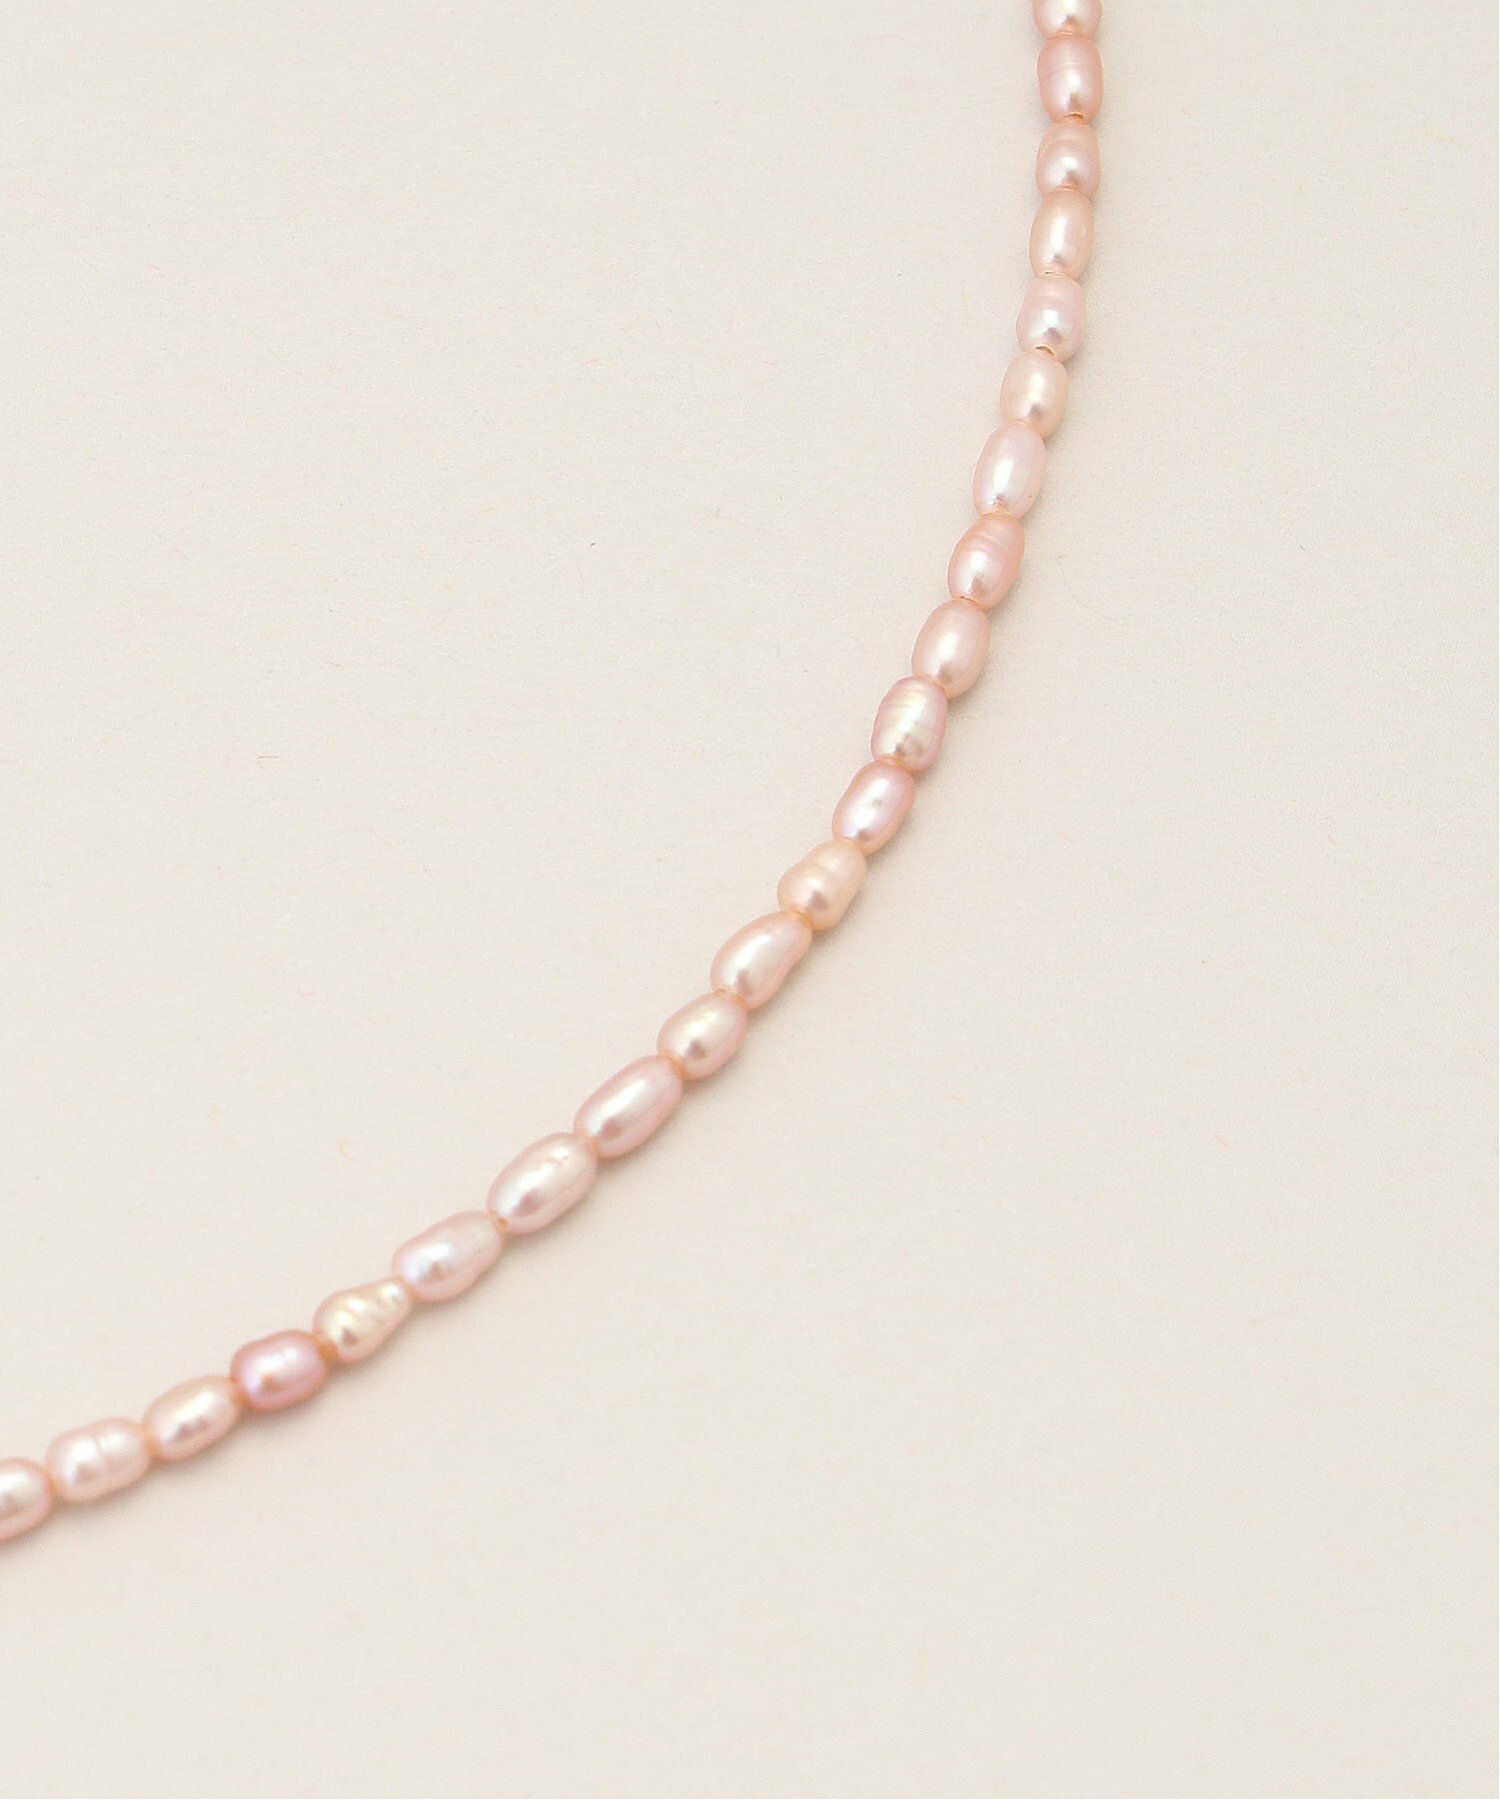 les bon bon/rose pearl choker ローズ パール チョーカー 淡水パール チョーカー ネックレス 日本製 MADE IN JAPAN ジュエリー ギフト ルボンボン